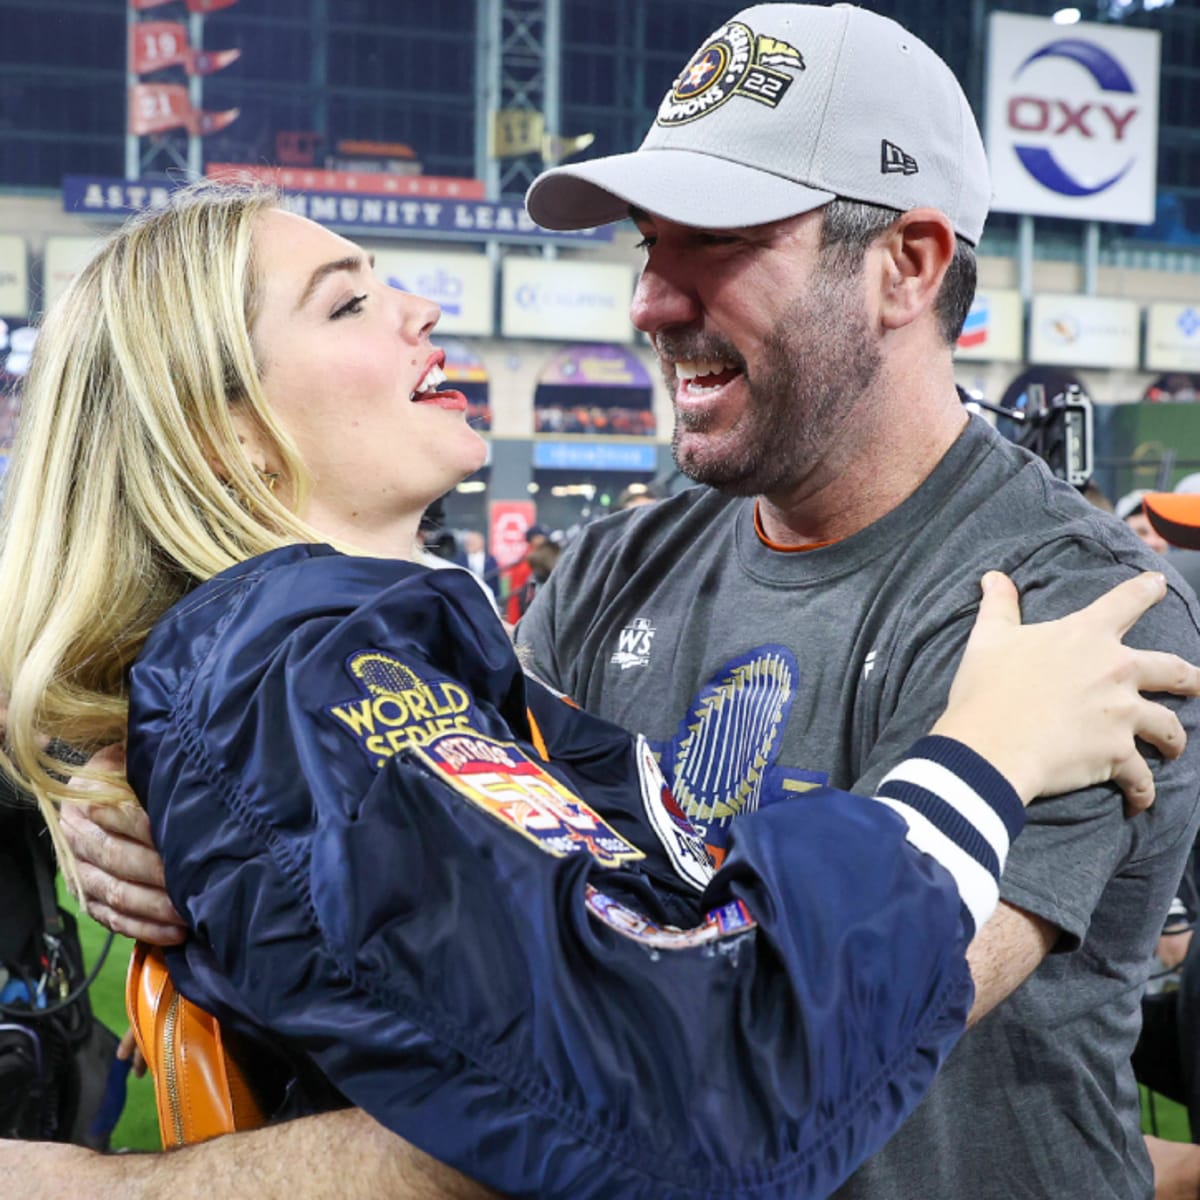 How did MLB star Justin Verlander meet his wife Kate Upton?